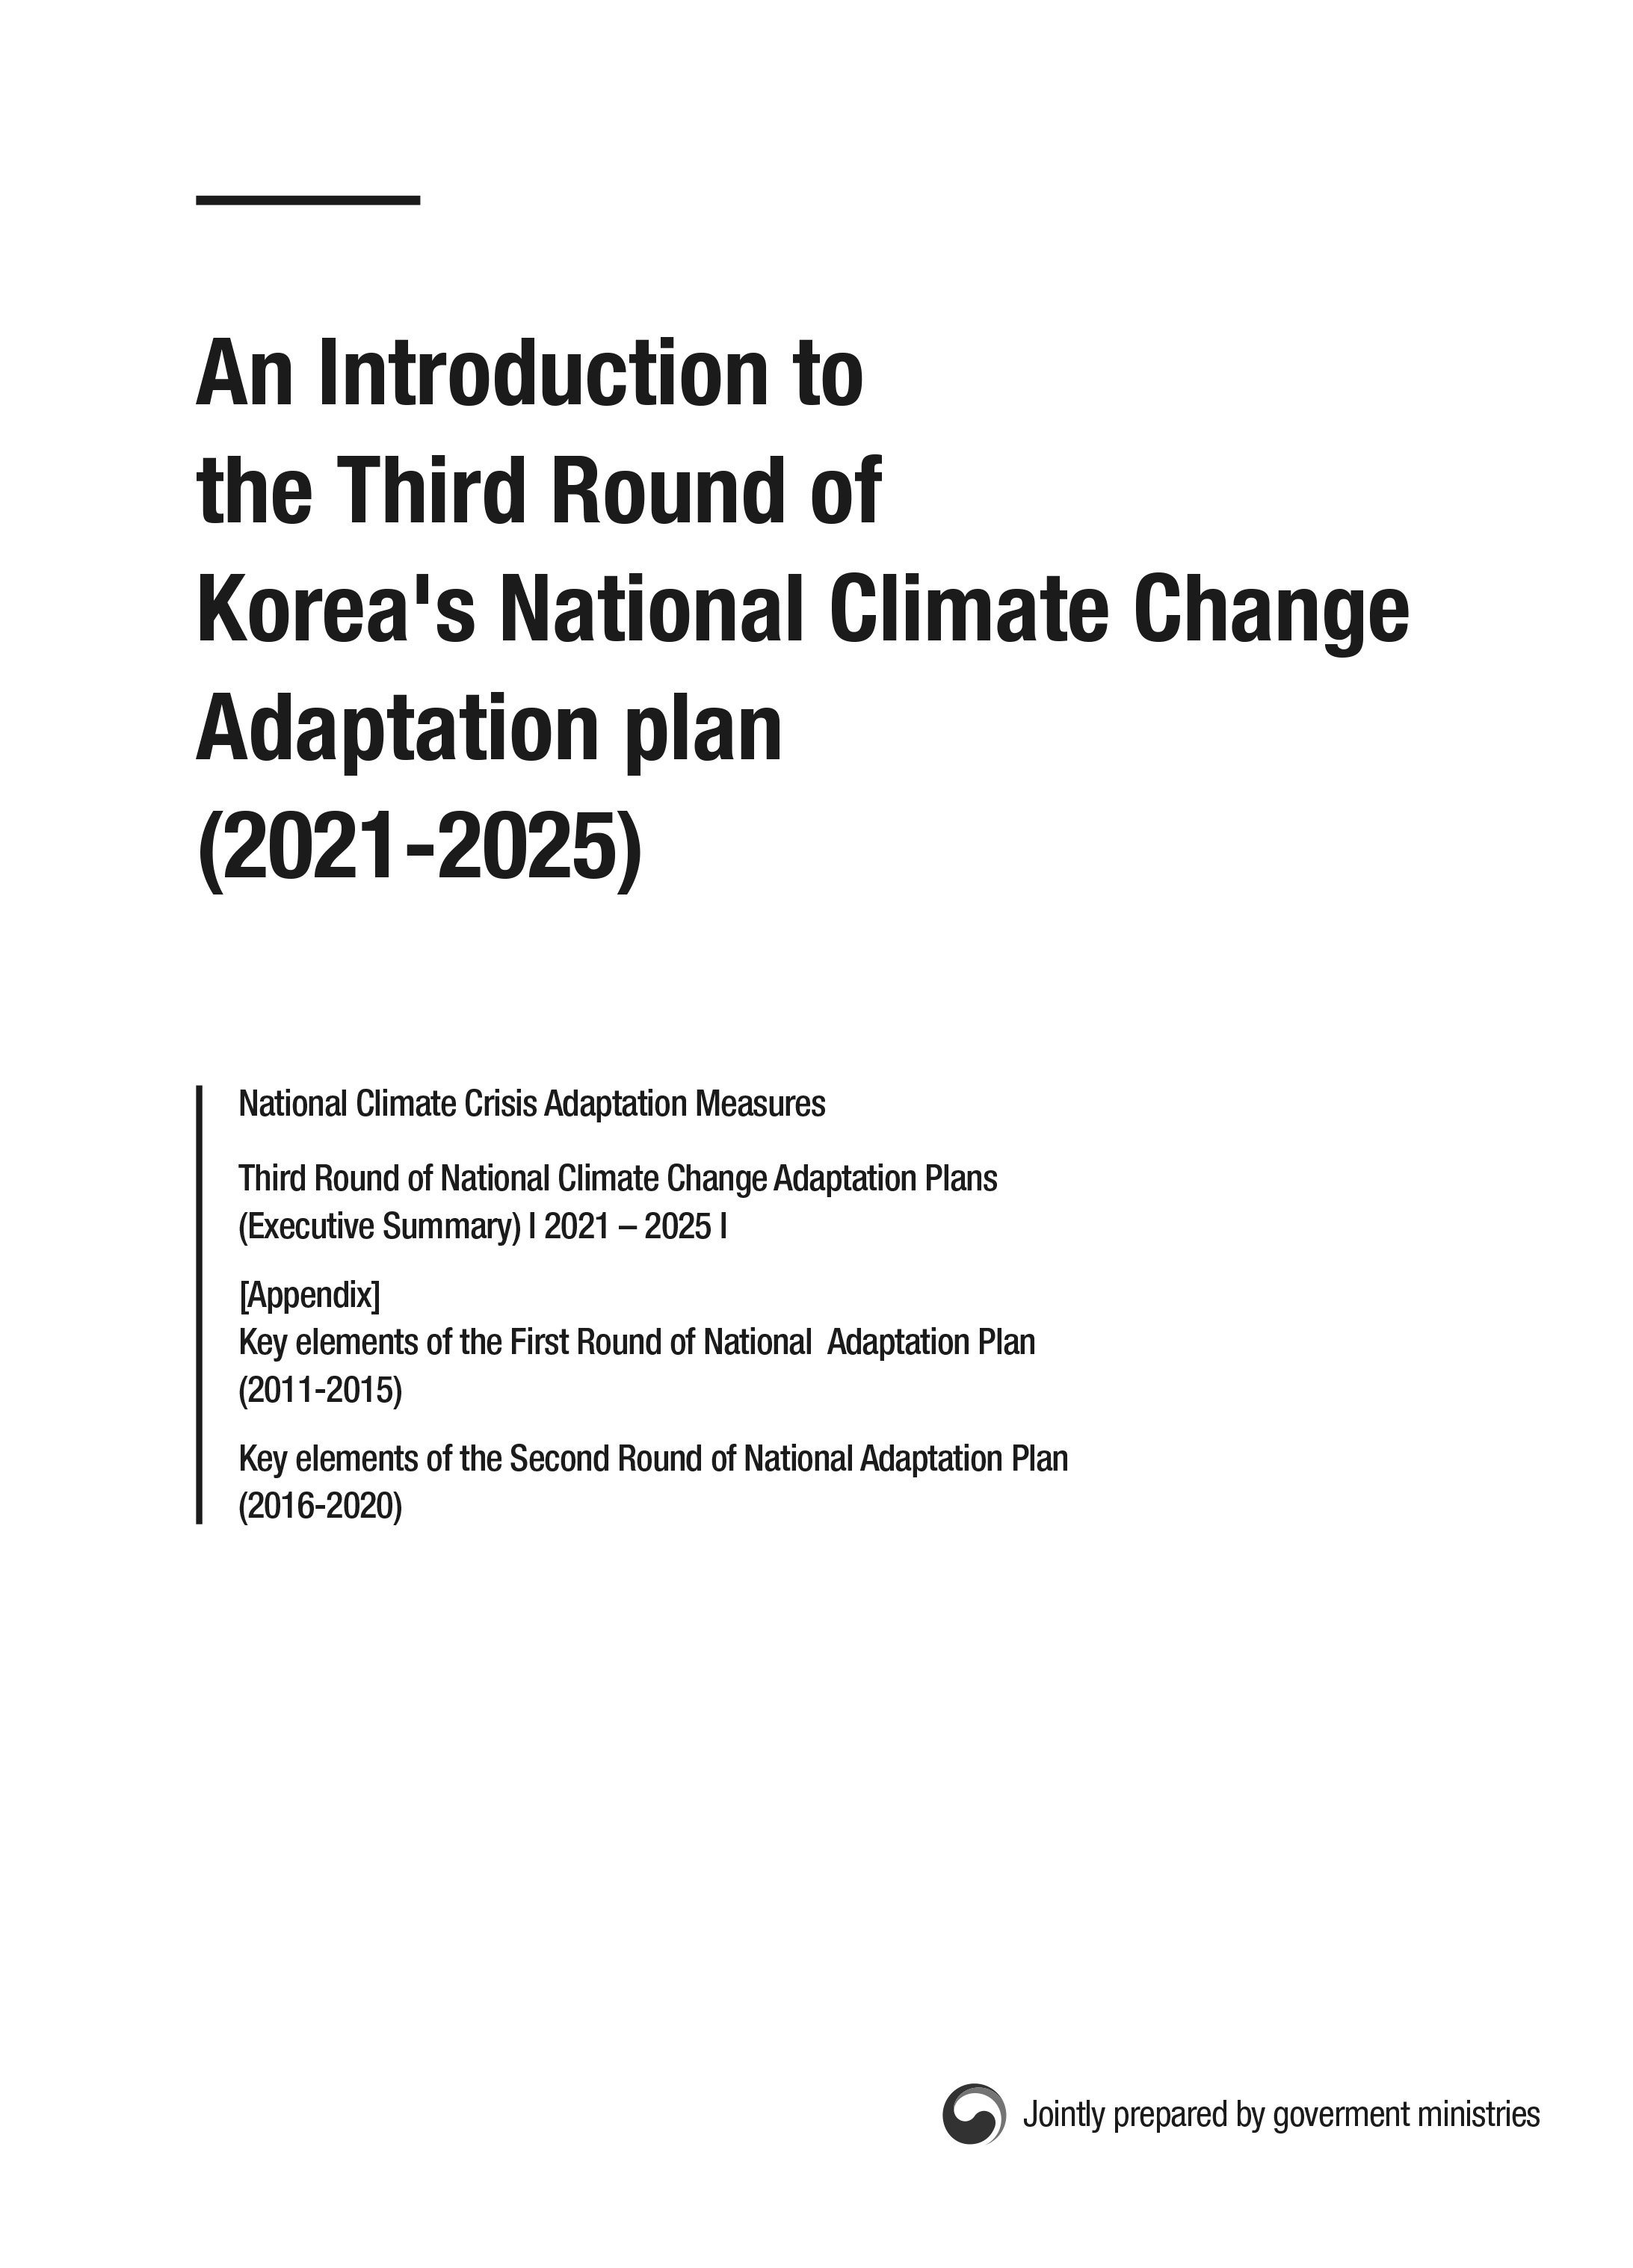 [Eng] 제3차 국가 기후변화 적응대책 소개자료 (An Introduction to the Third Round of Korea's National Climate Change Adaptation plan (2021-2025))